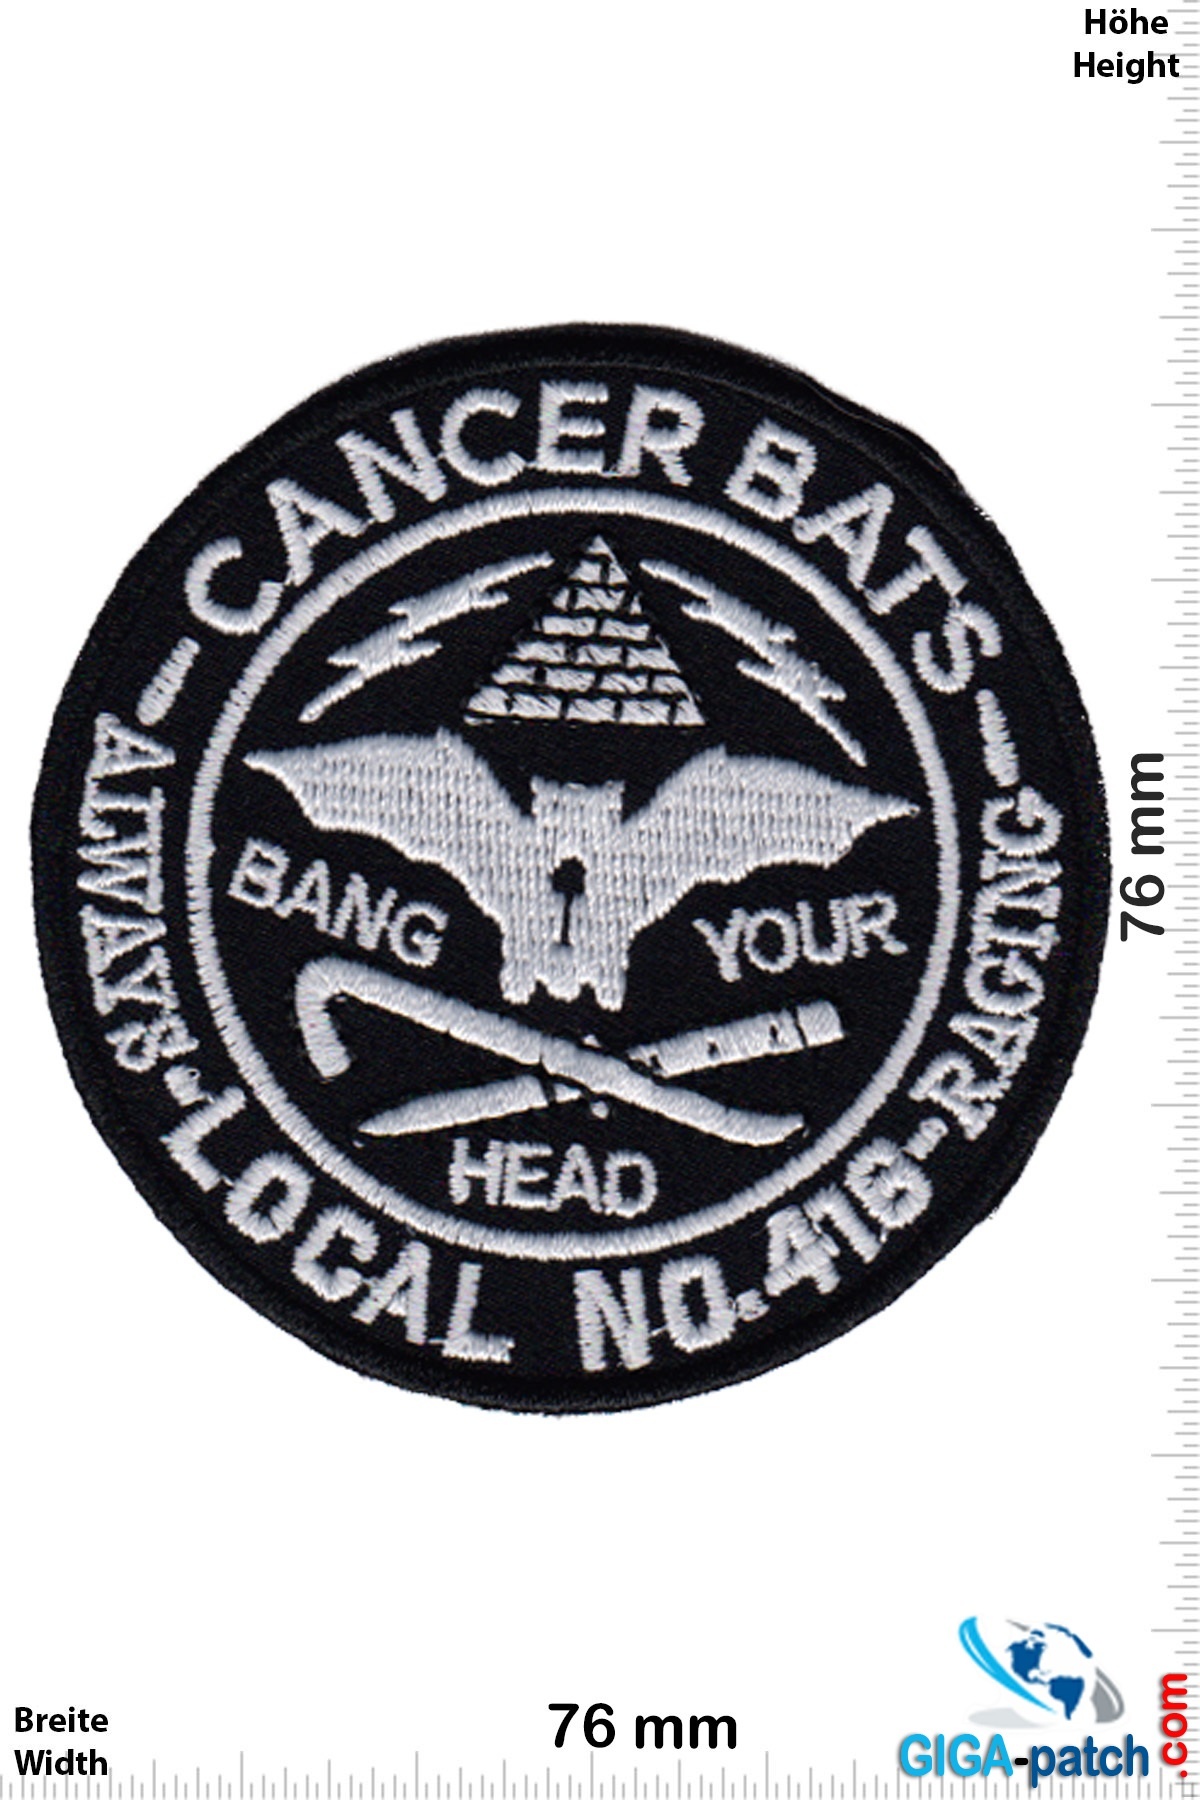 Cancer Bats - Bang your Head - Hardcore-Band